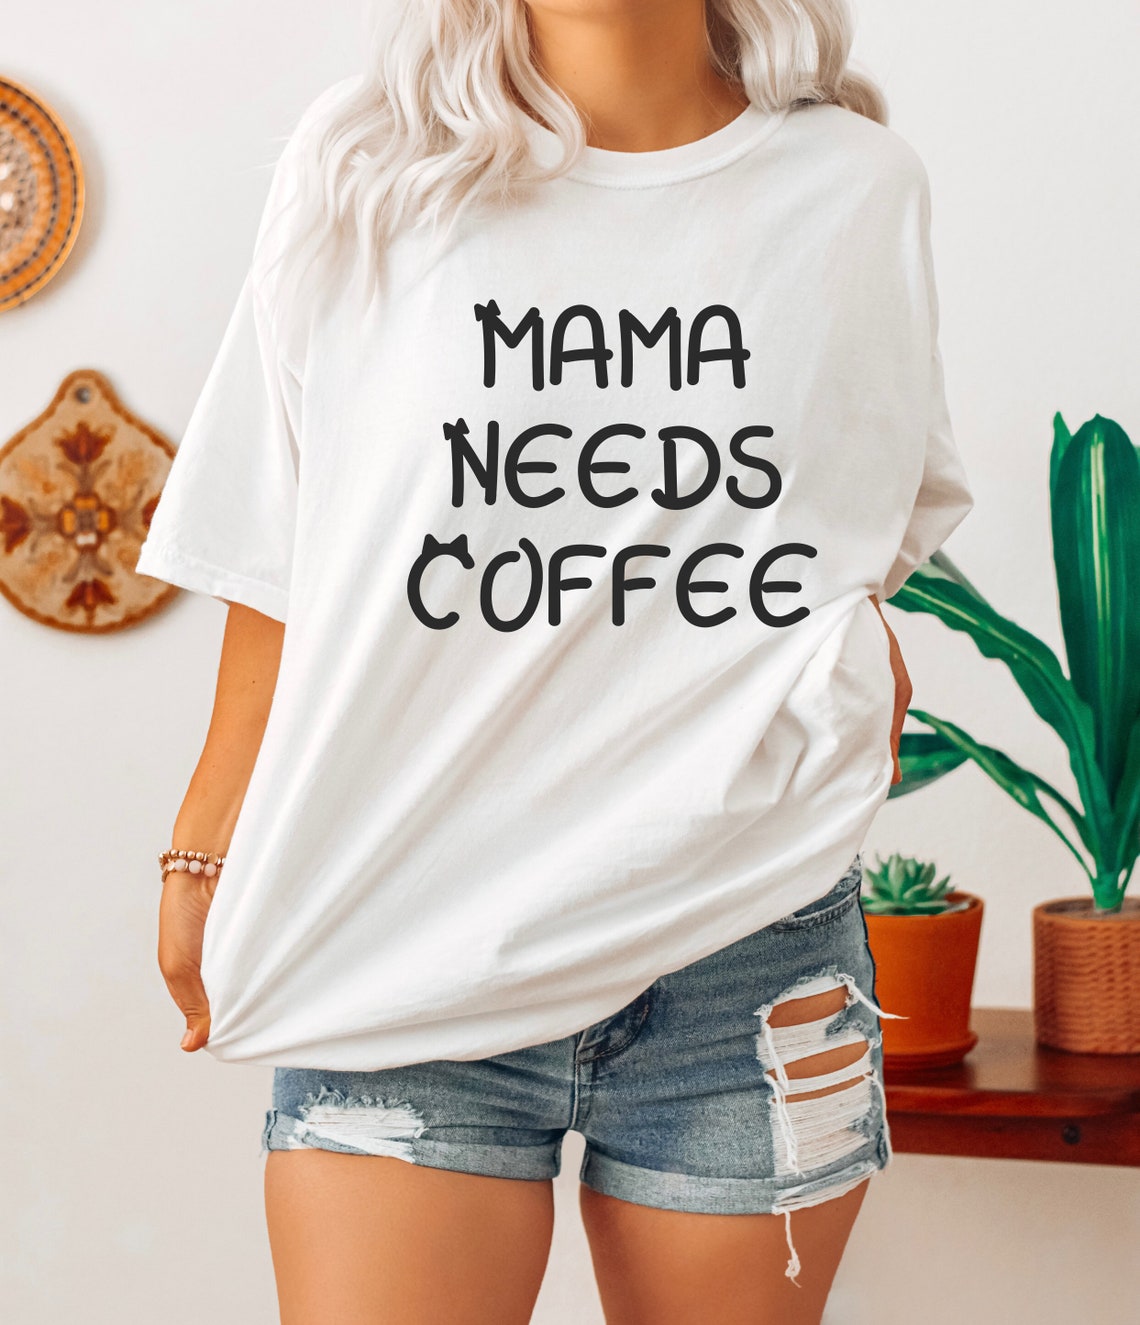 Mama Needs Coffee Svg Caffeine Addict Mom Life Funny Saying Etsy